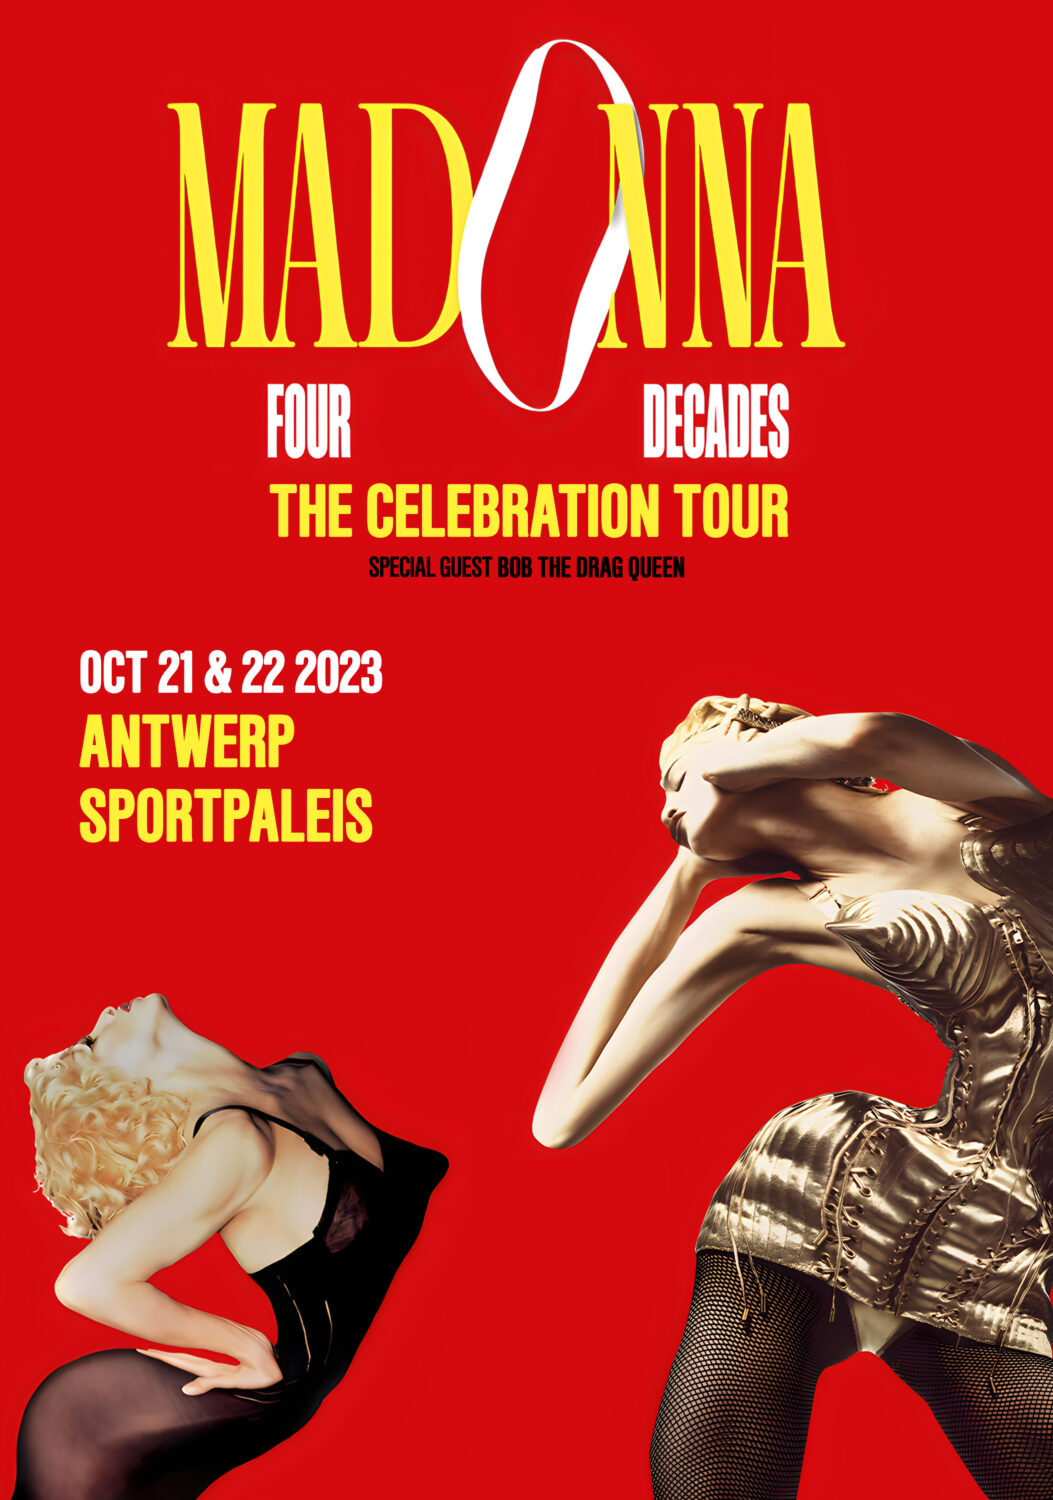 madonna tour europe dates